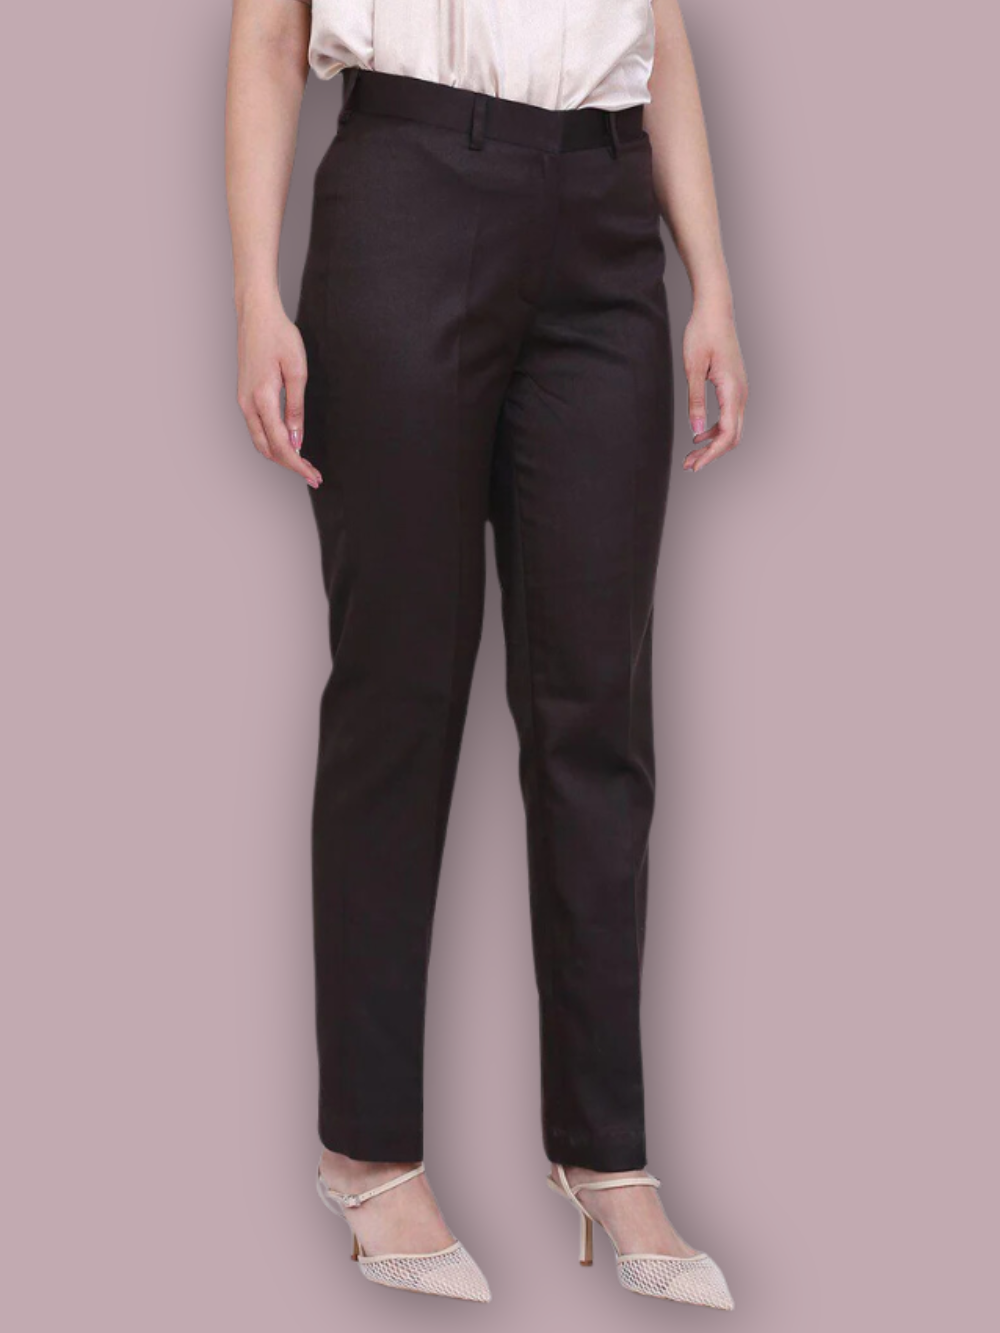 Big Size 29-42 Summer 2021 Wrinkle-Resistant Black Suit Pants Mens Clothing  Baggy Double Pleated Classic Dress Pants Trousers